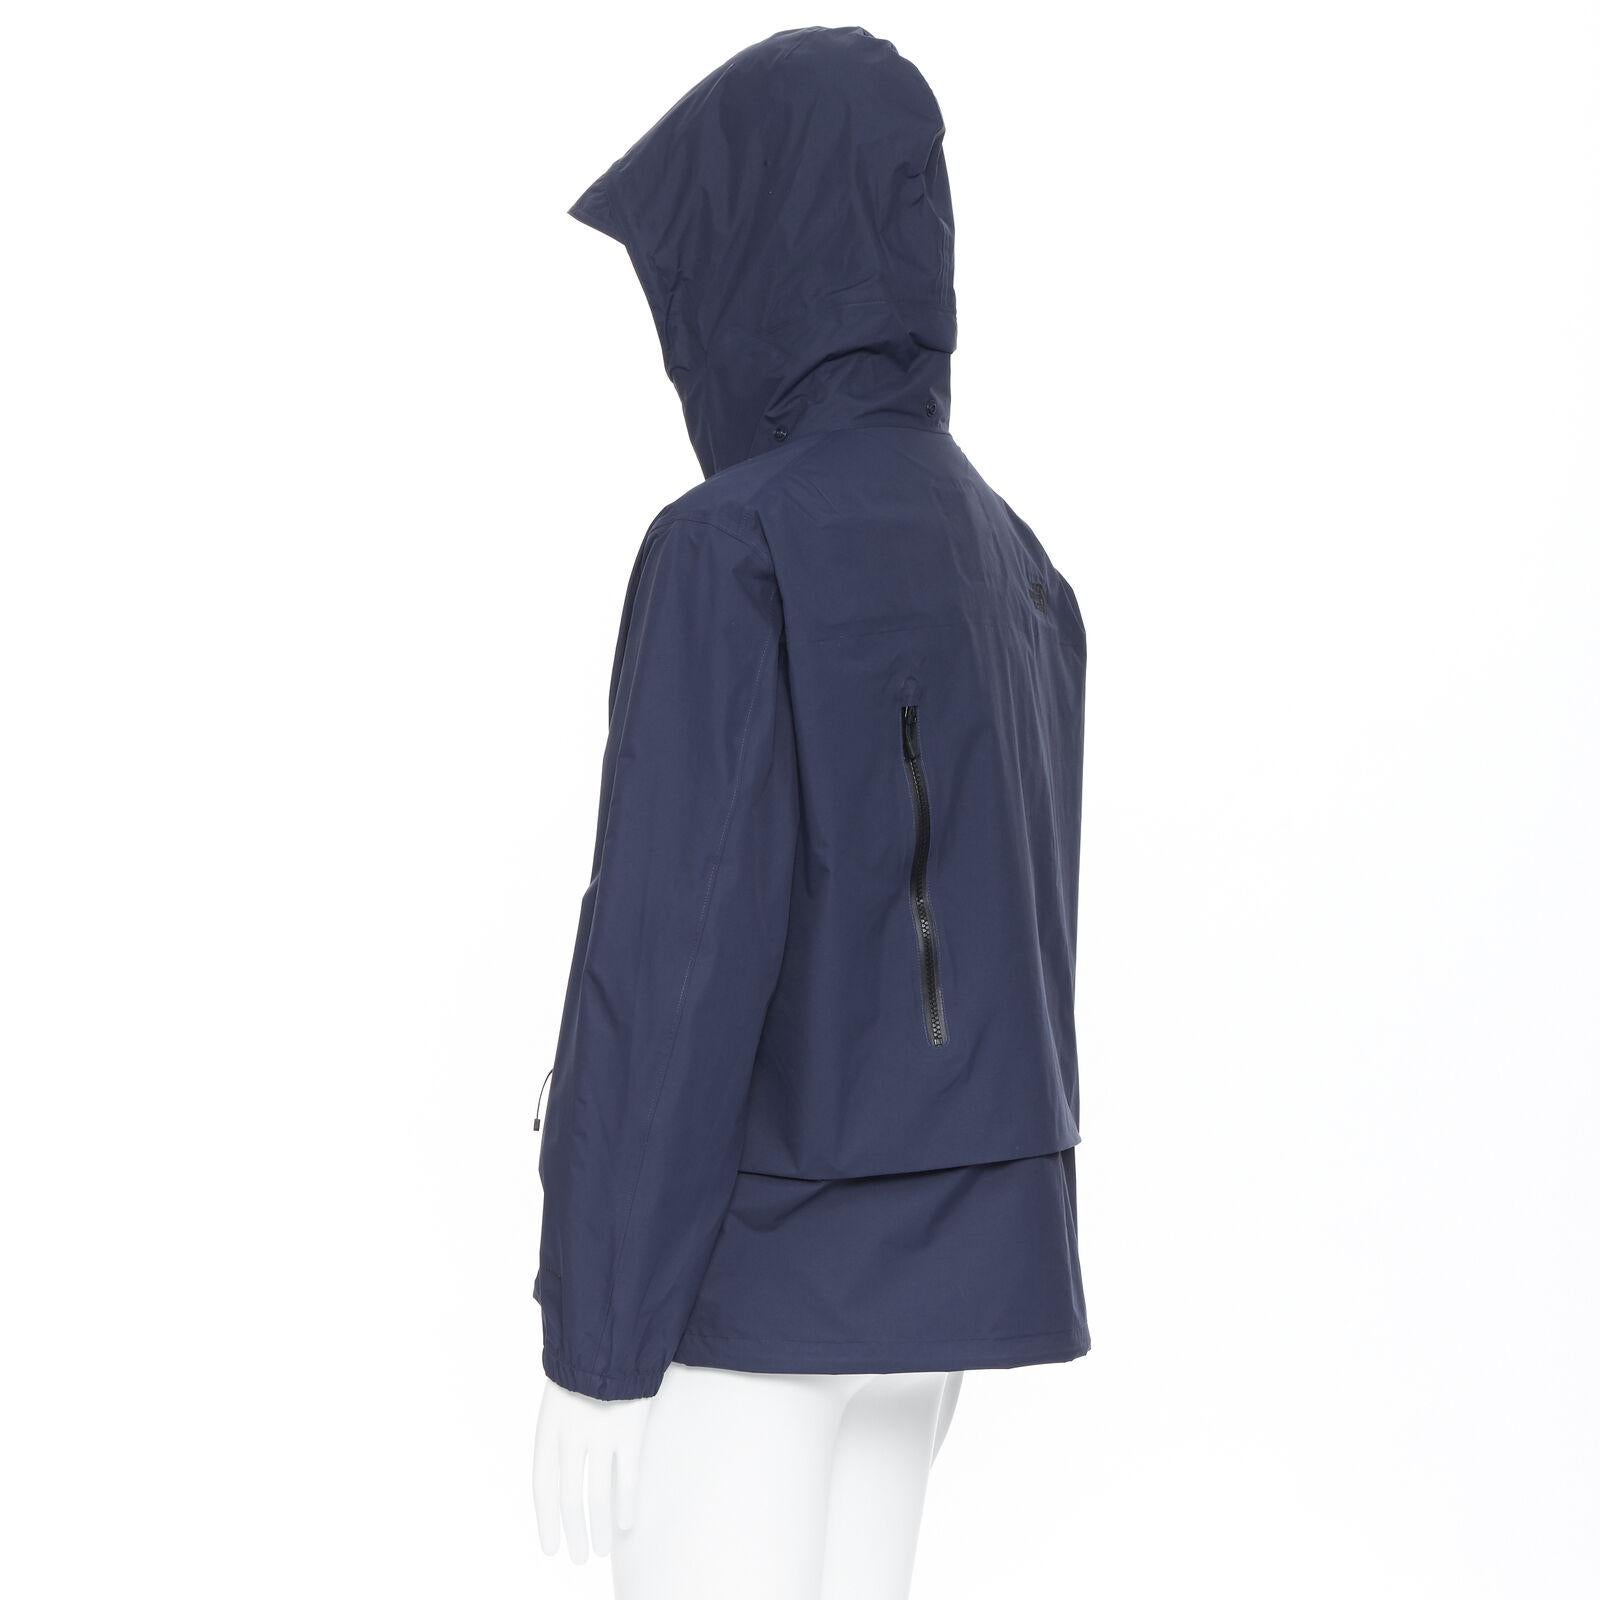 new THE NORTH FACE Black Series KK Urban Explore navy utility pocket jacket L XL For Sale 3